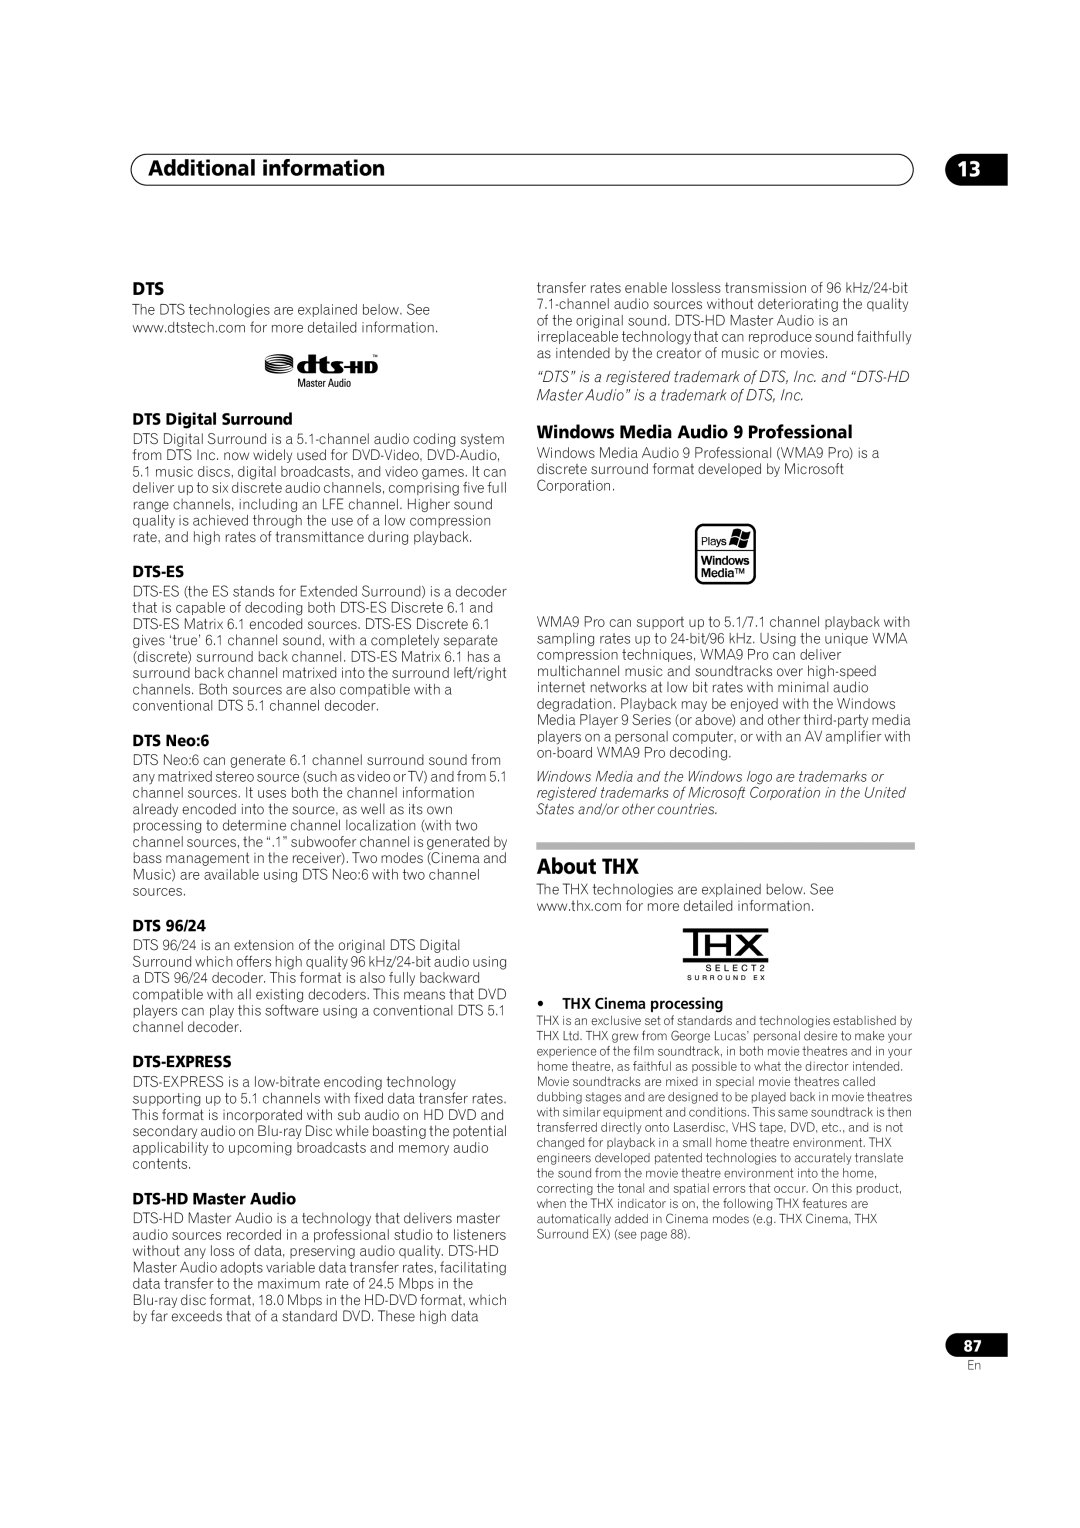 Pioneer VSX-LX70 manual About THX, Windows Media Audio 9 Professional, DTS Digital Surround, Dts-Es, DTS Neo:6, DTS 96/24 